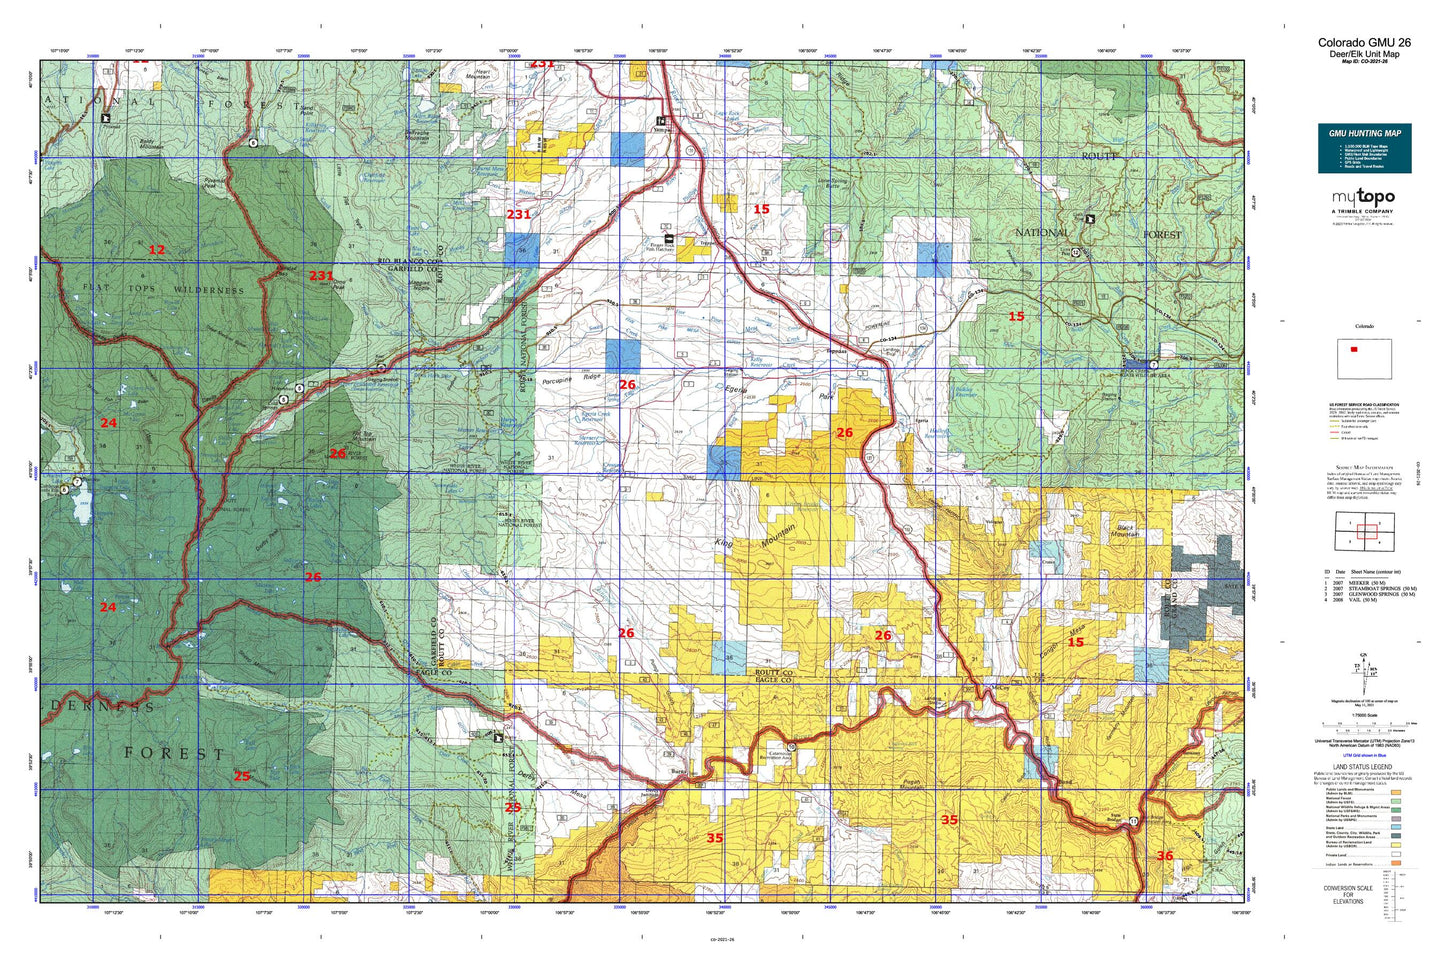 Colorado GMU 26 Map Image